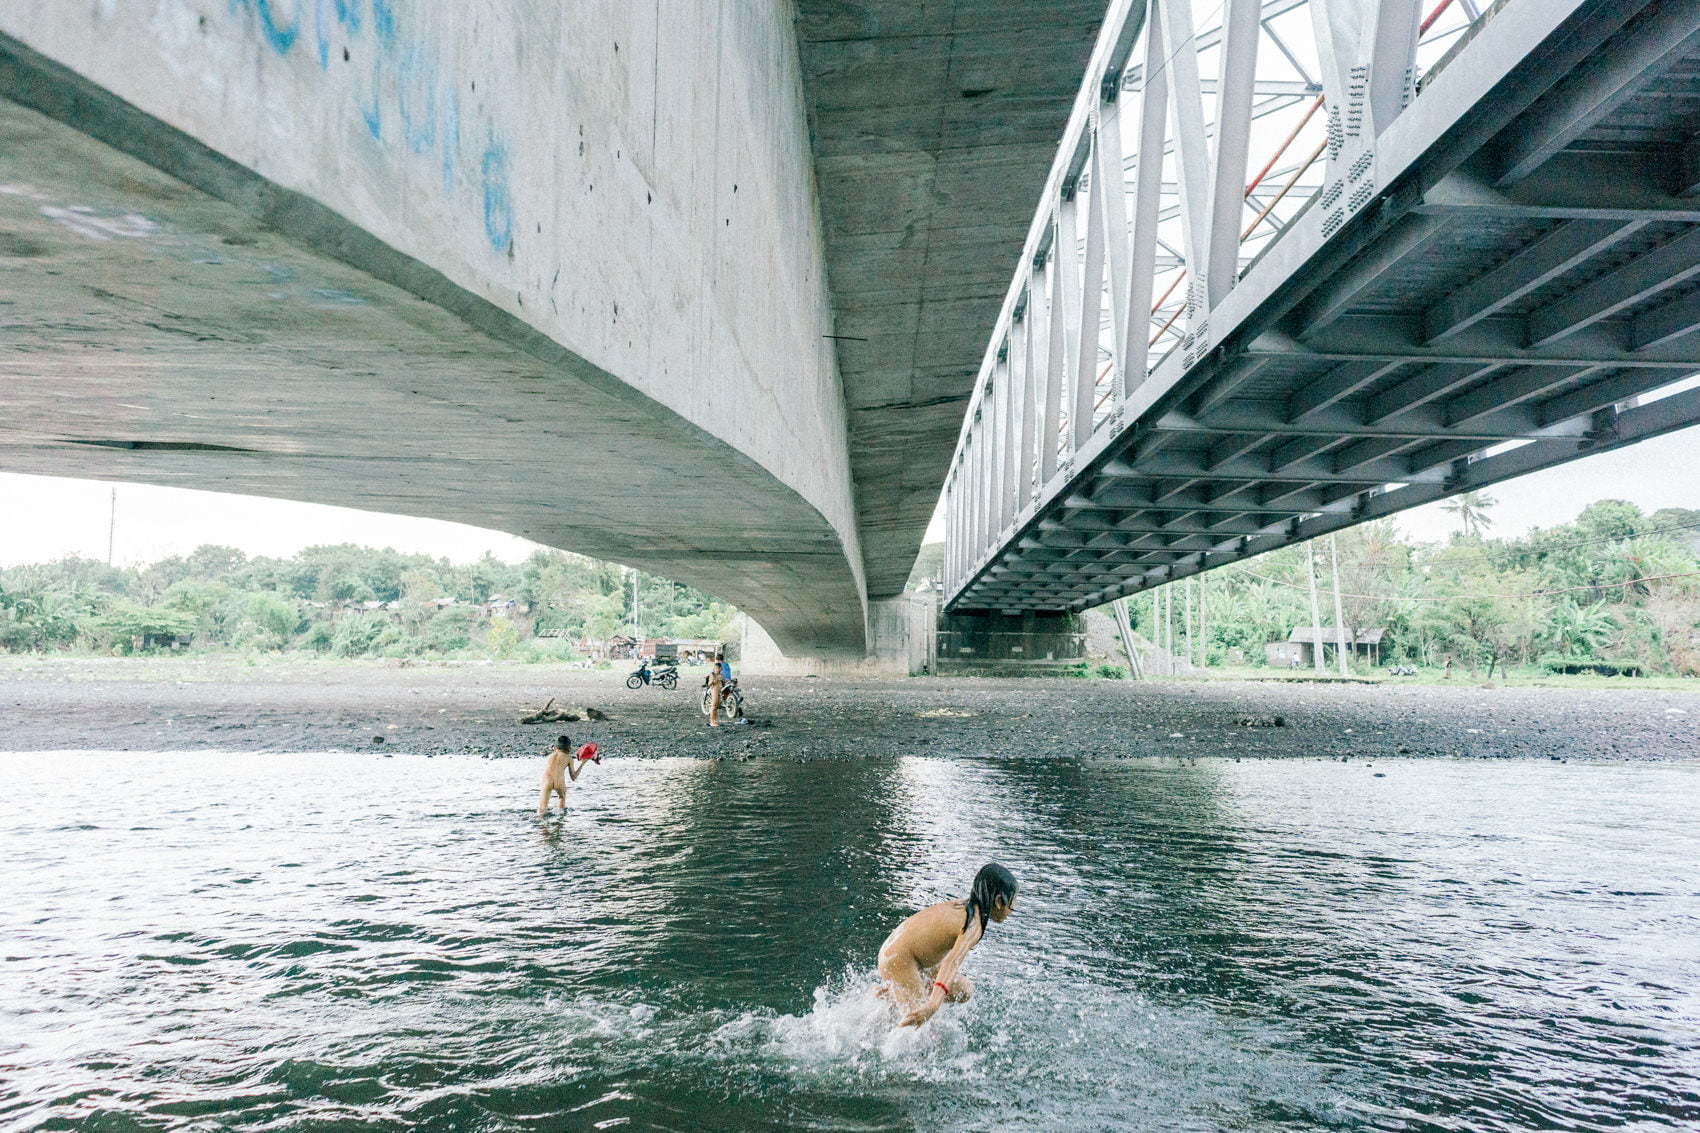 Children take a bath in the river under the bridge